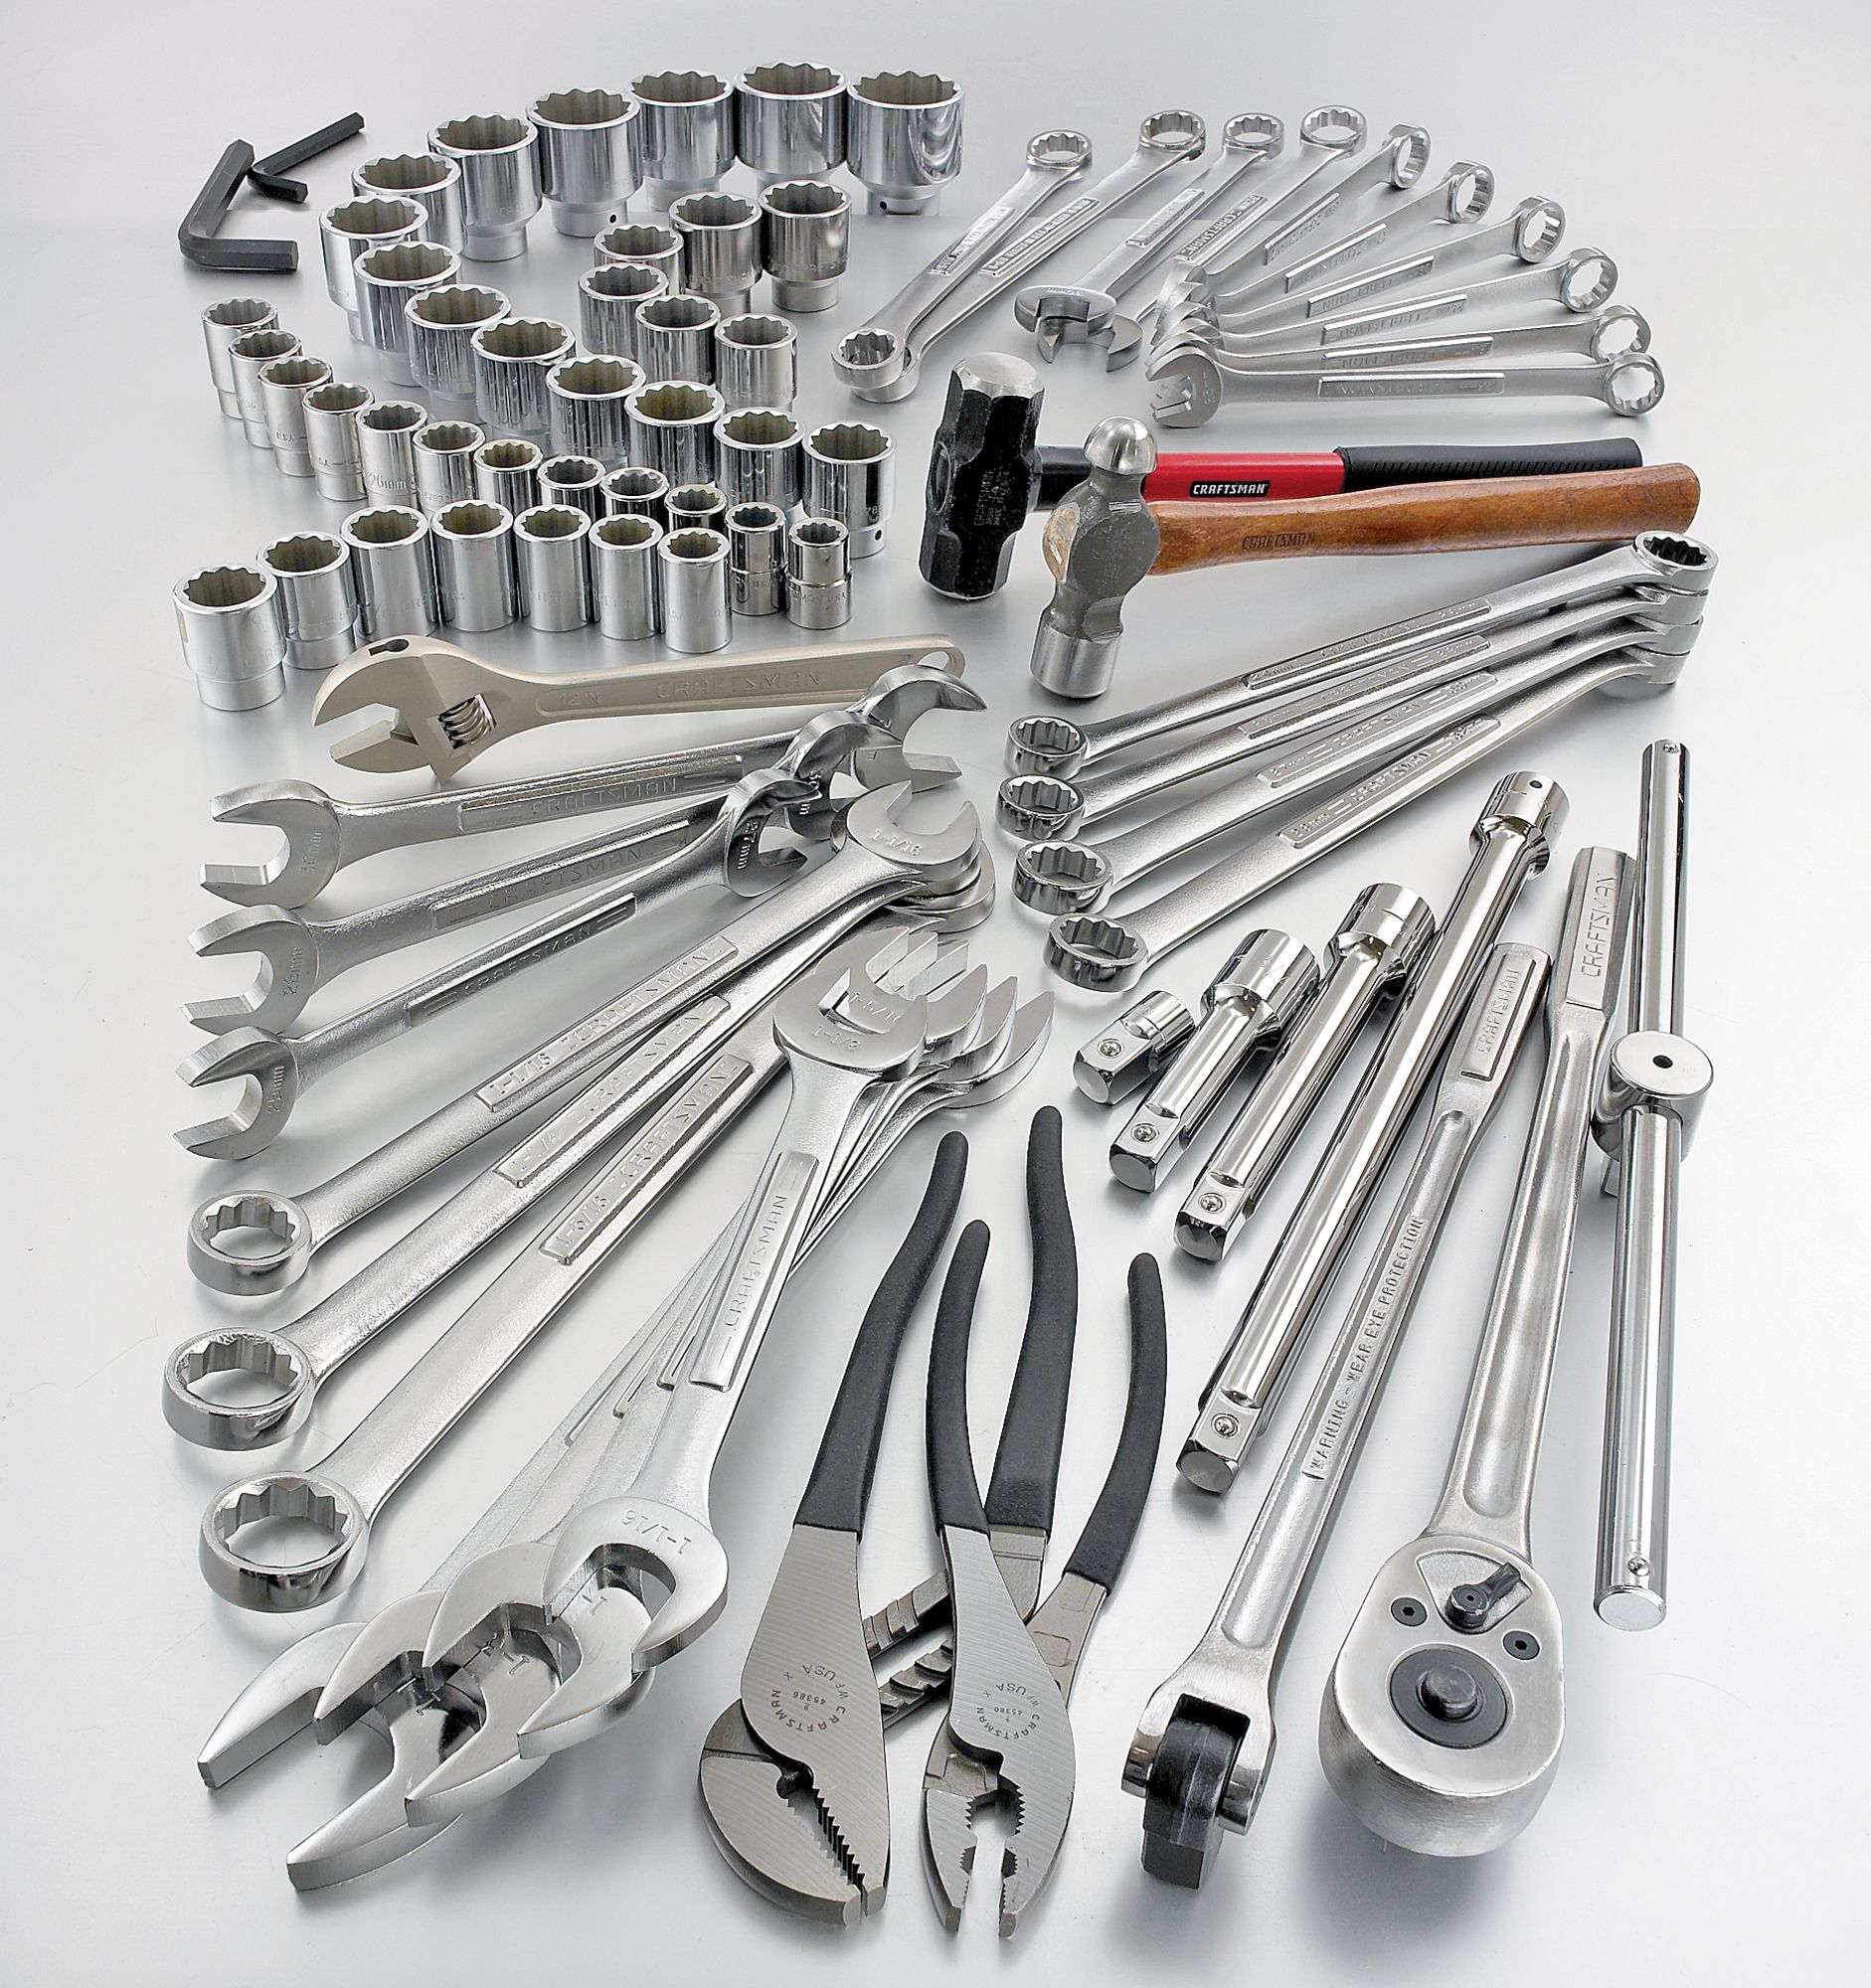 Craftsman CLOSEOUT! 77 pc. Heavy-Duty Mechanics Tool Set